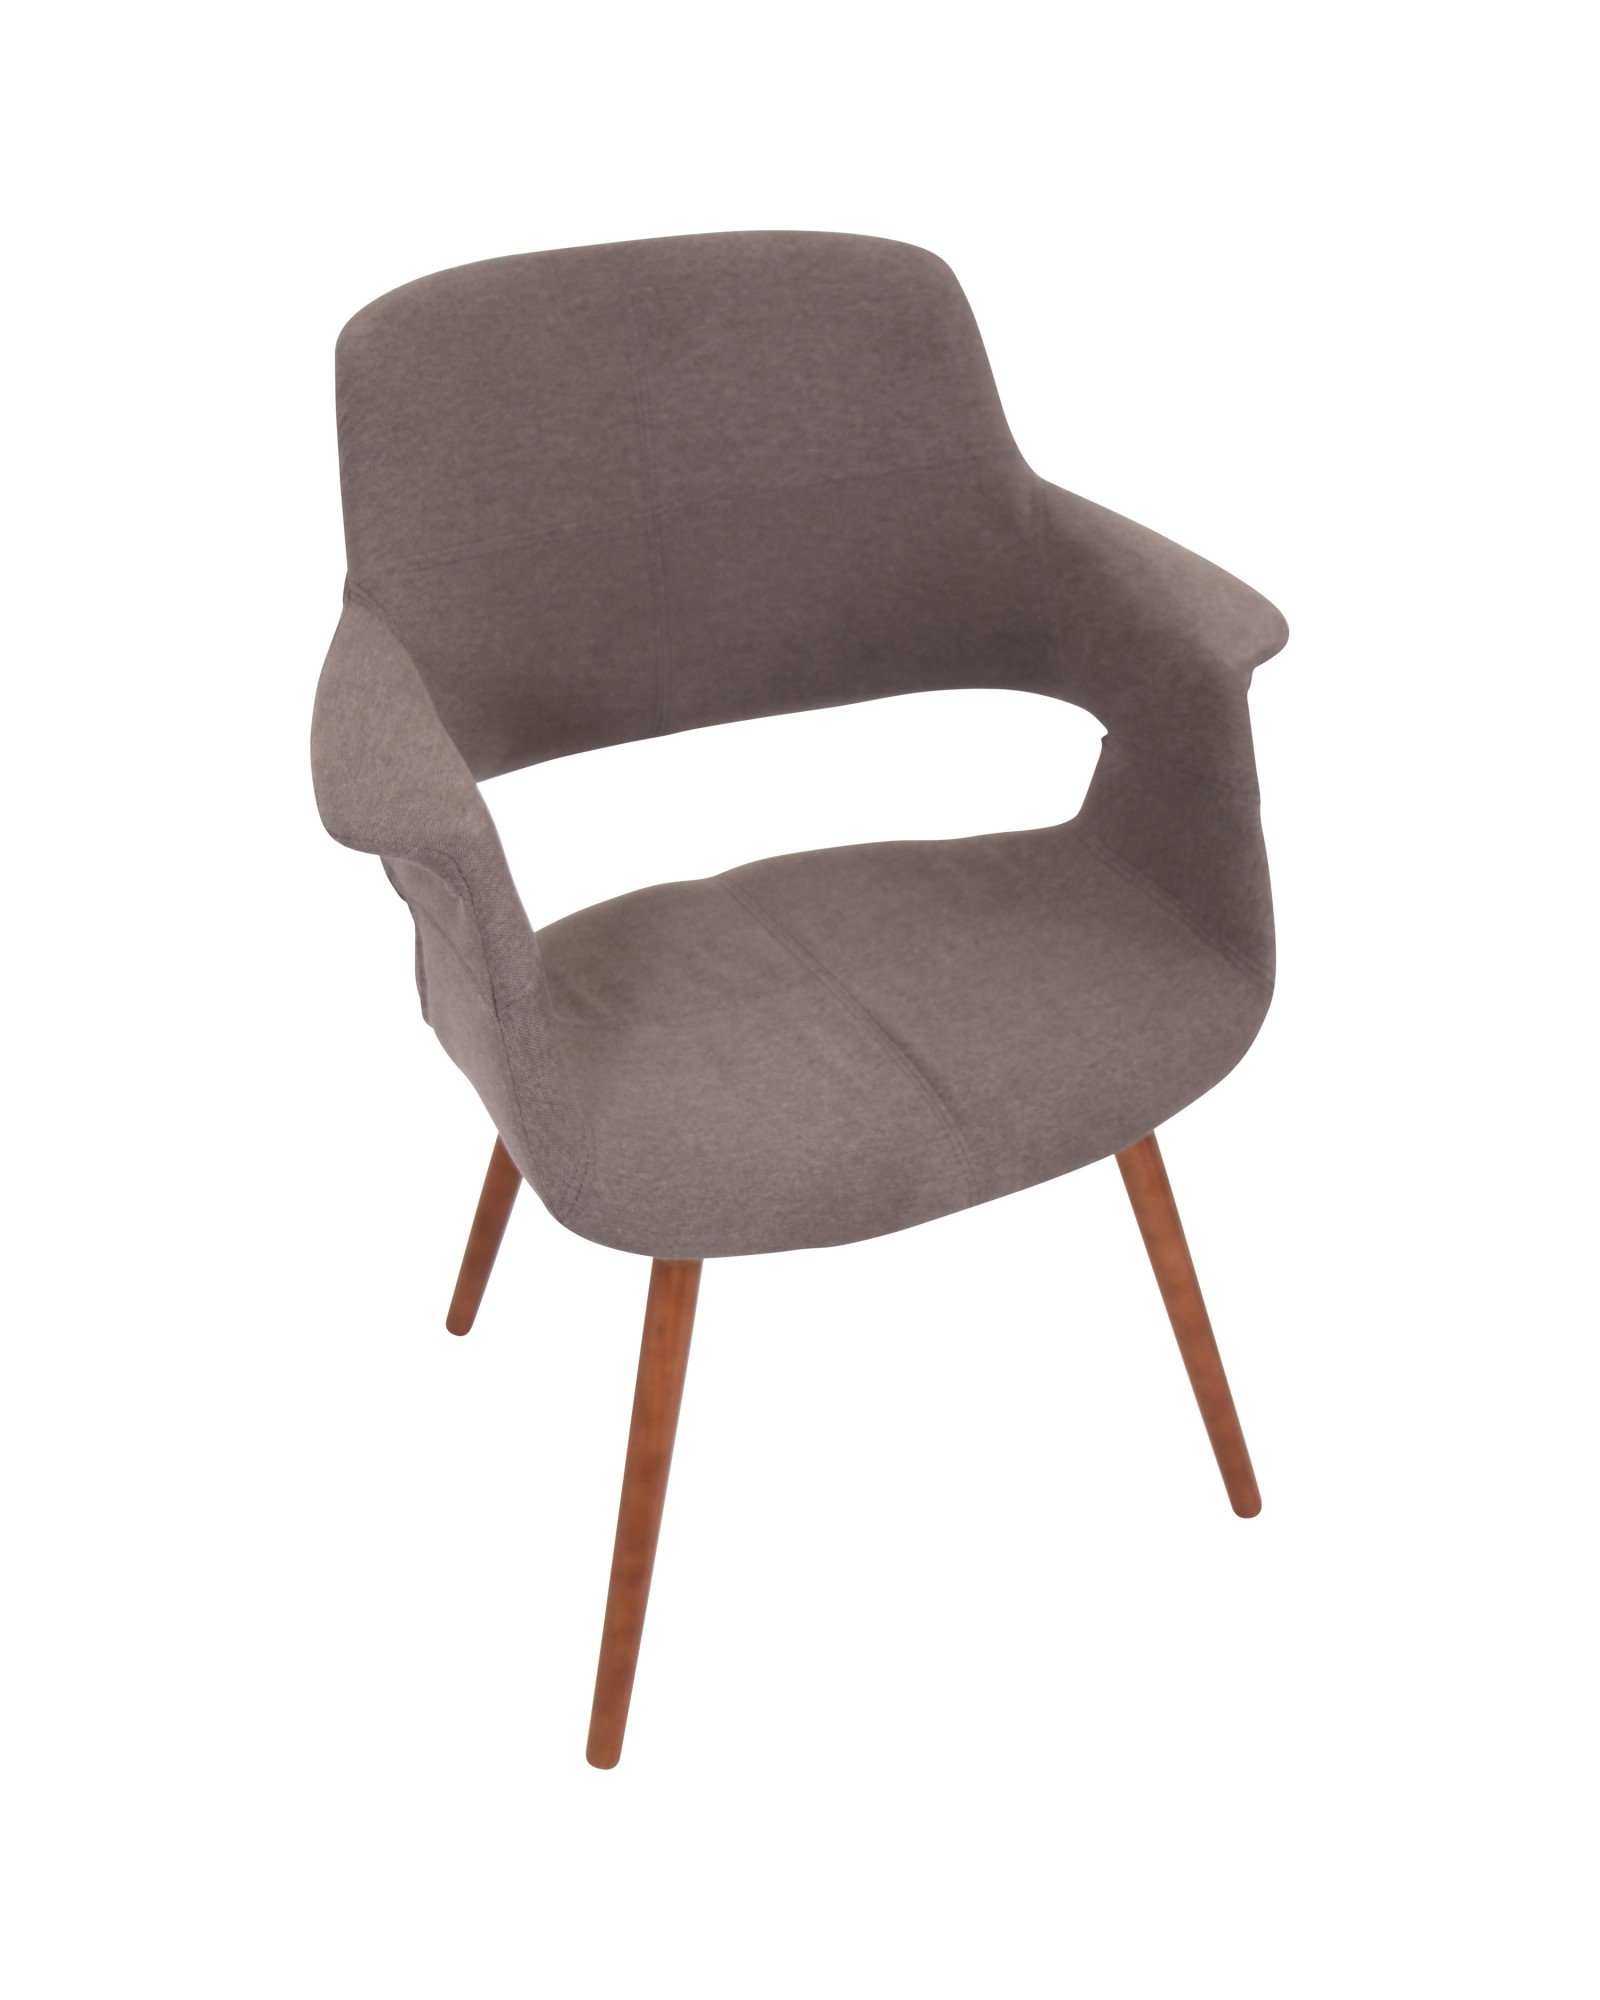 Vintage Flair Mid-Century Modern Chair in Medium Brown